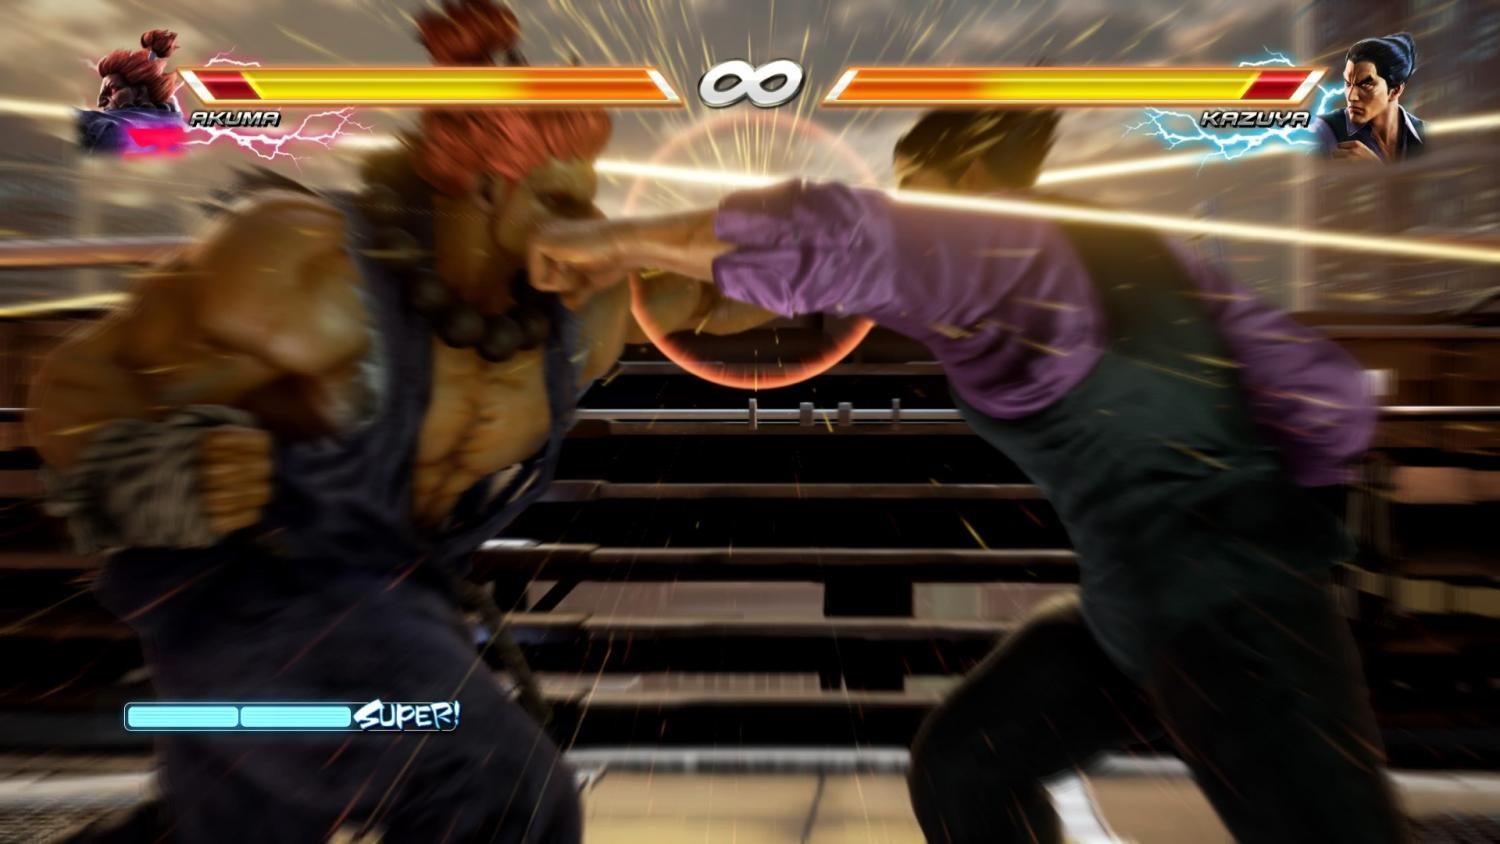 Kazuya Mishima  Mishima, Tekken 7, Video game images